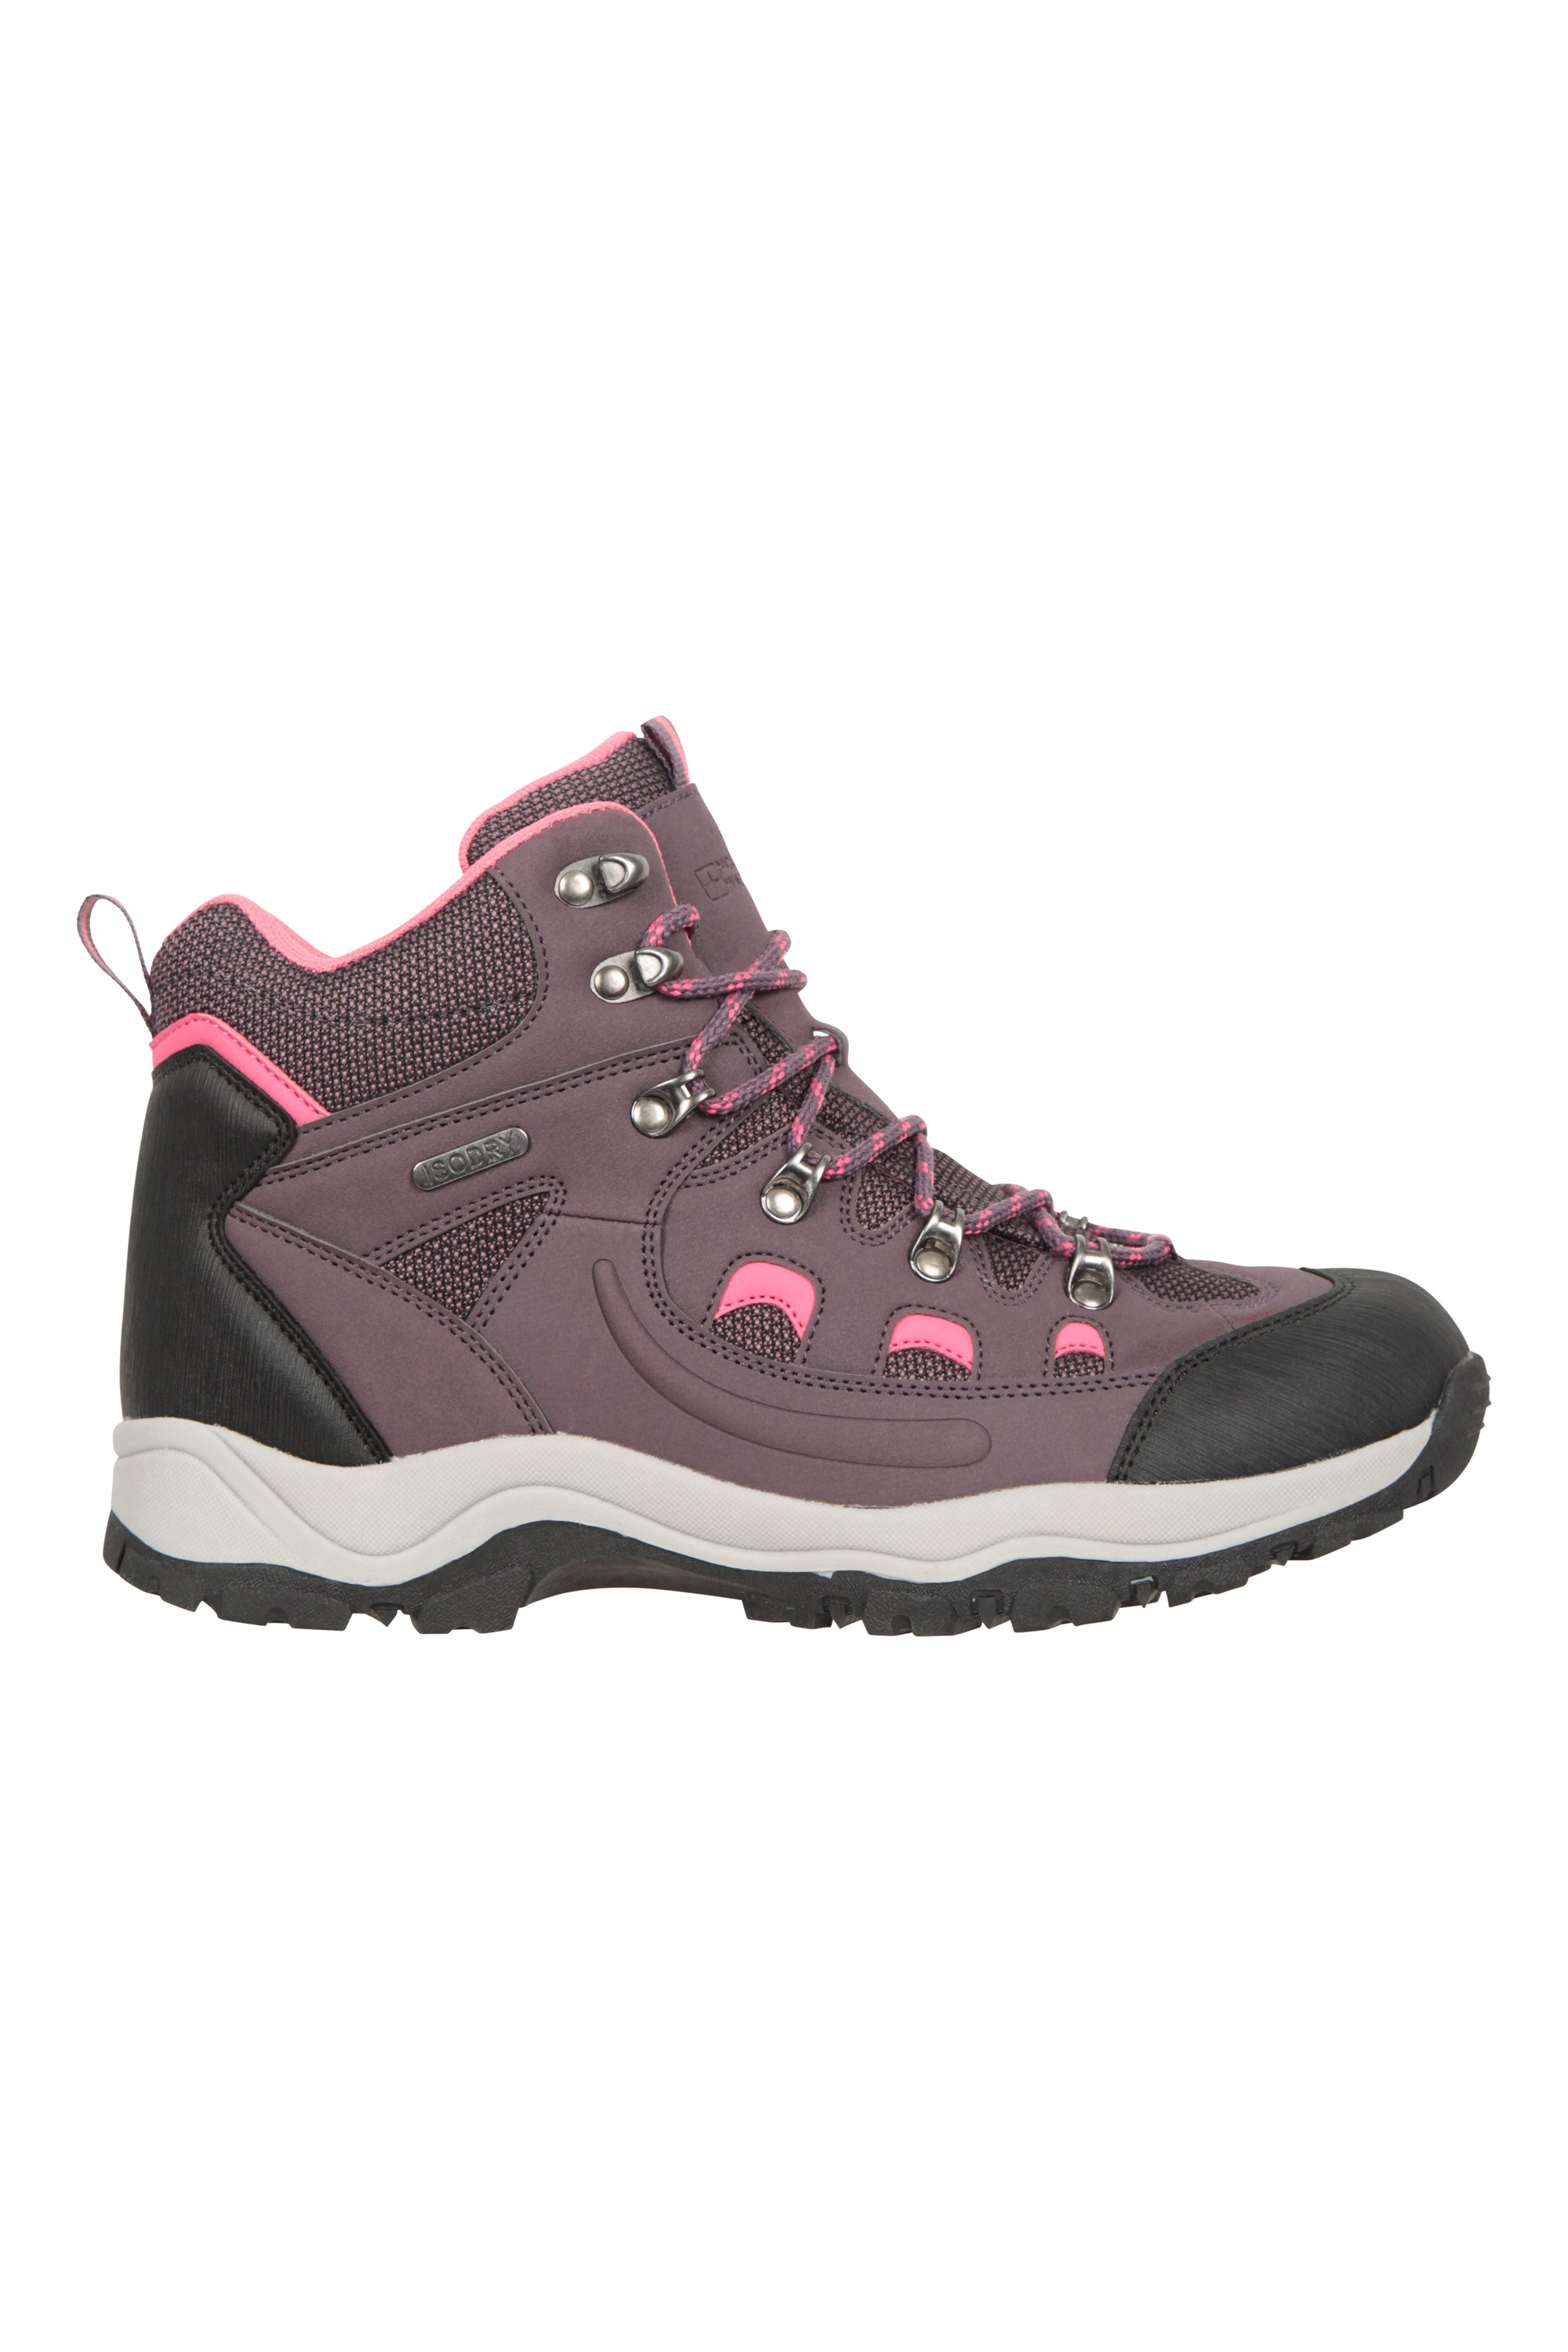 Adventurer Womens Waterproof Walking Boots - Pink